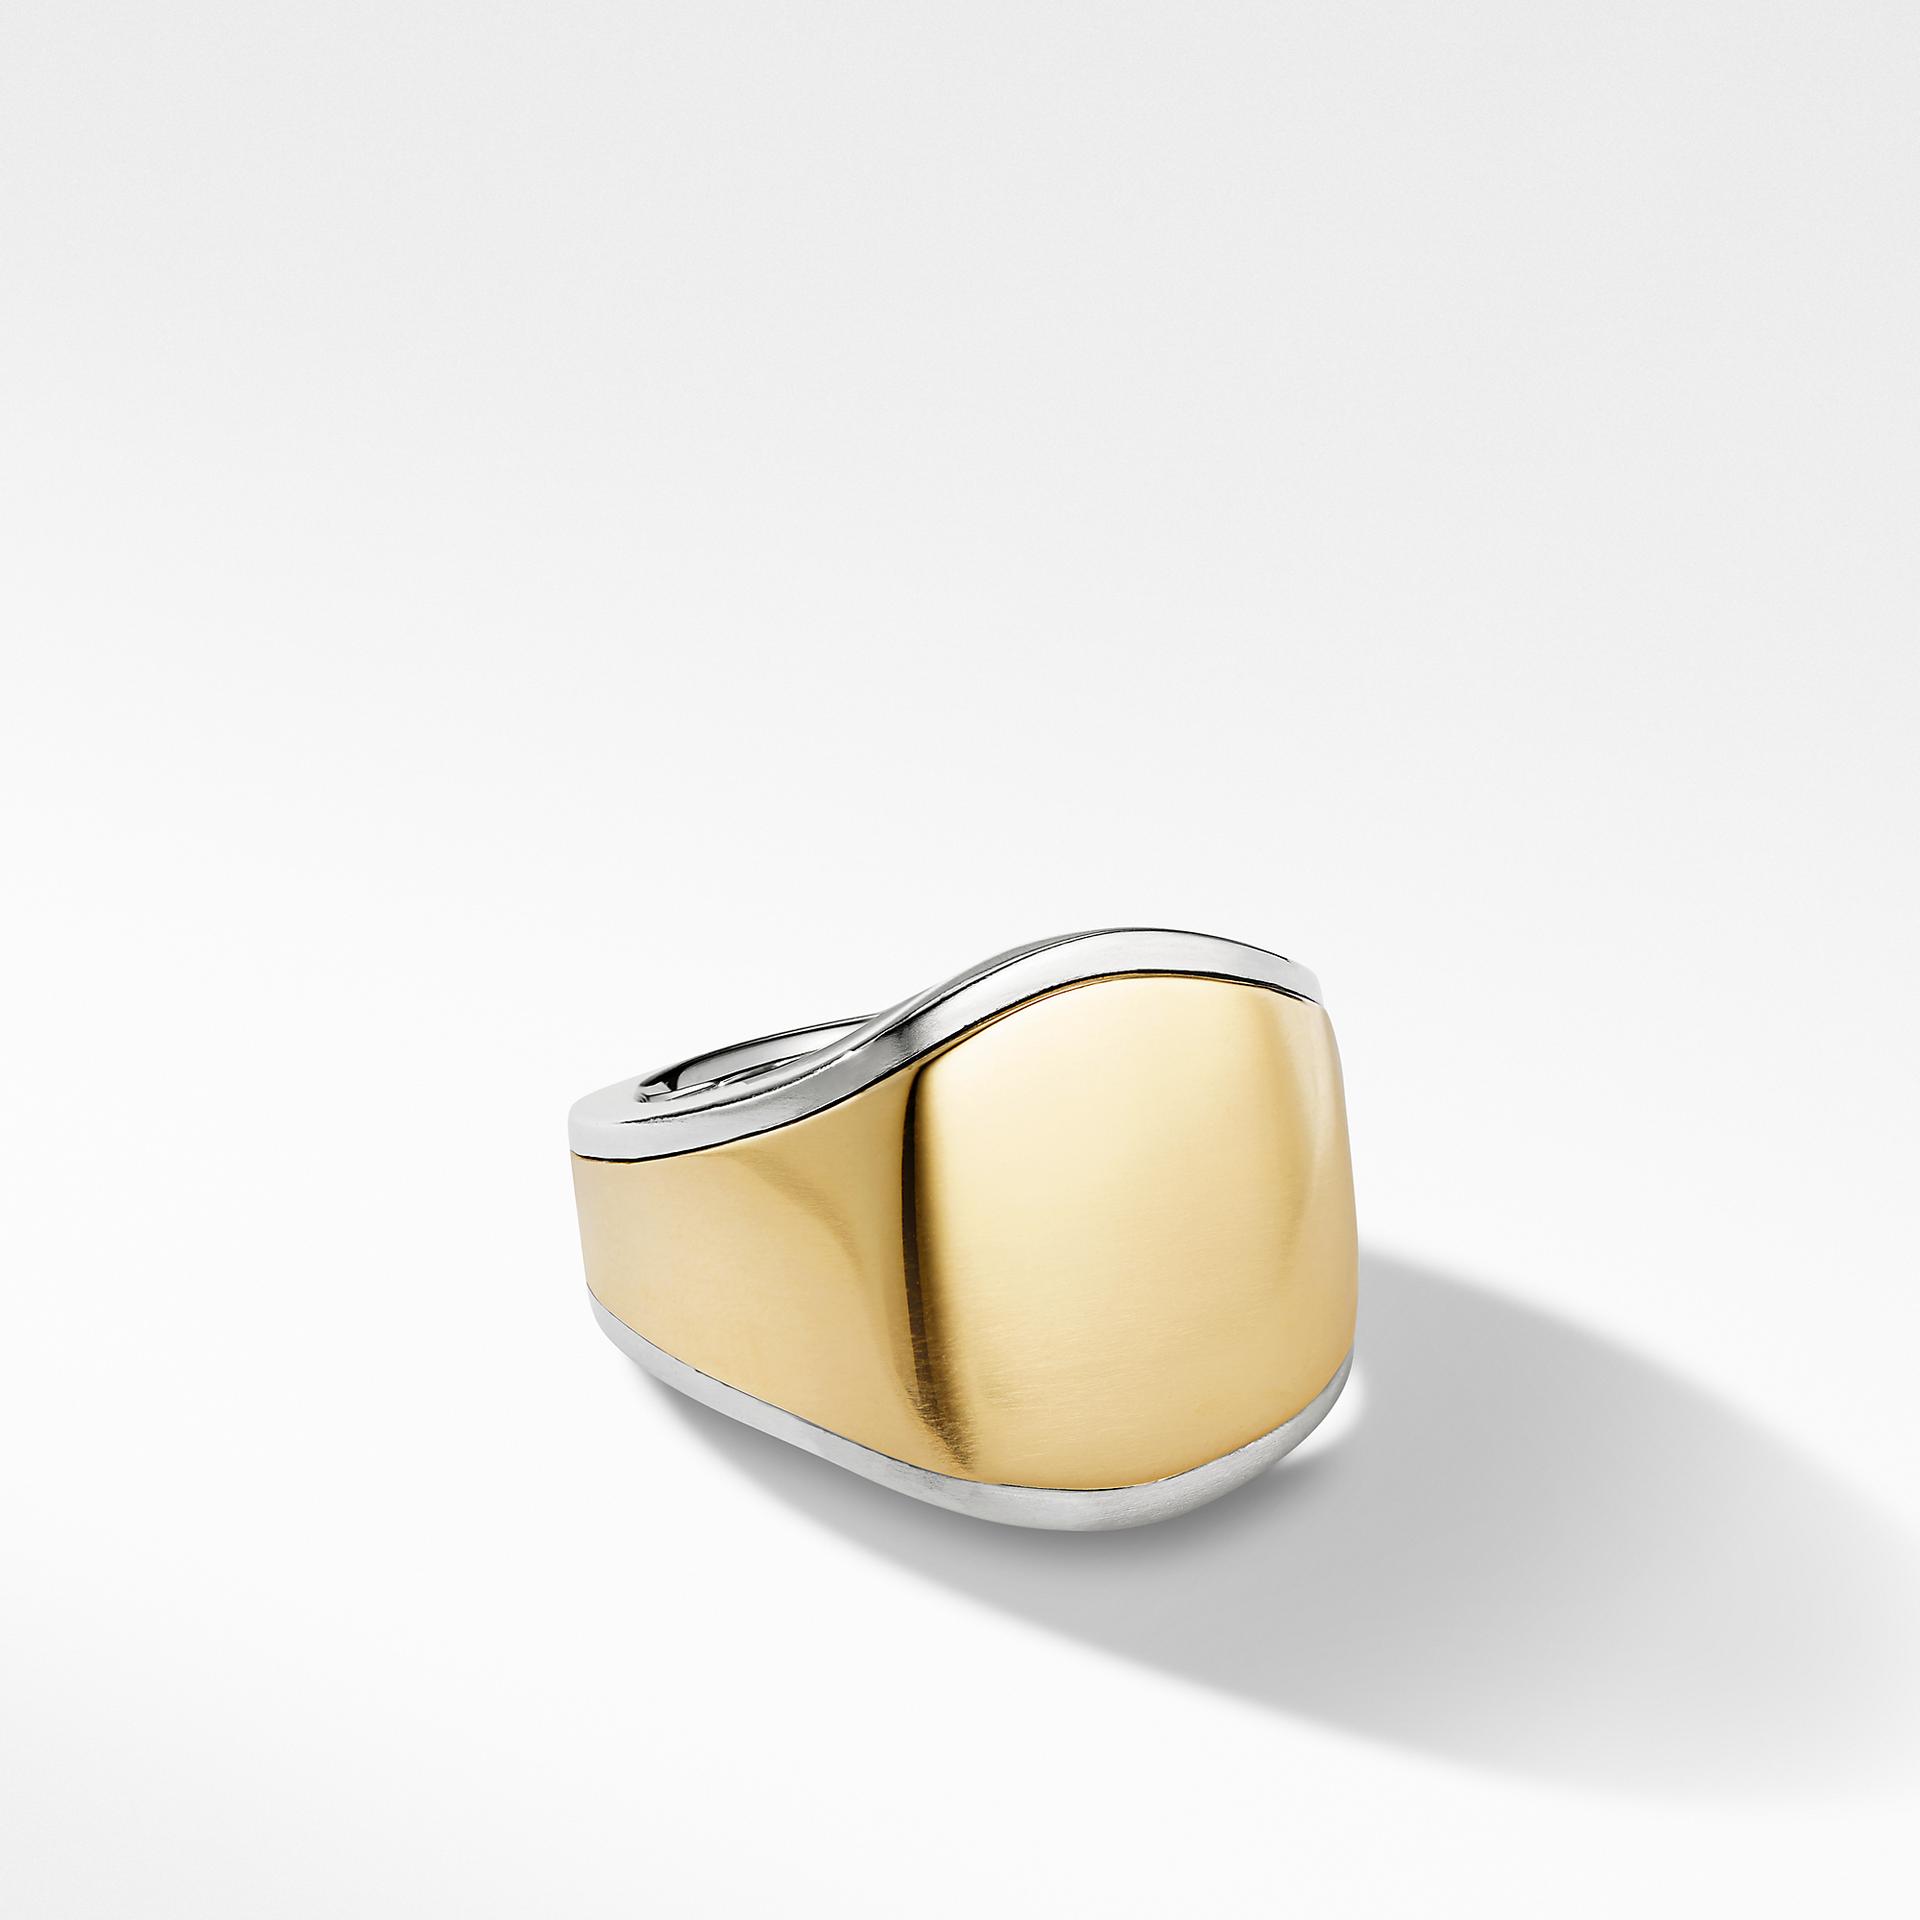 David Yurman Mens Streamline Signet Ring with 18K Yellow Gold, size 10 0